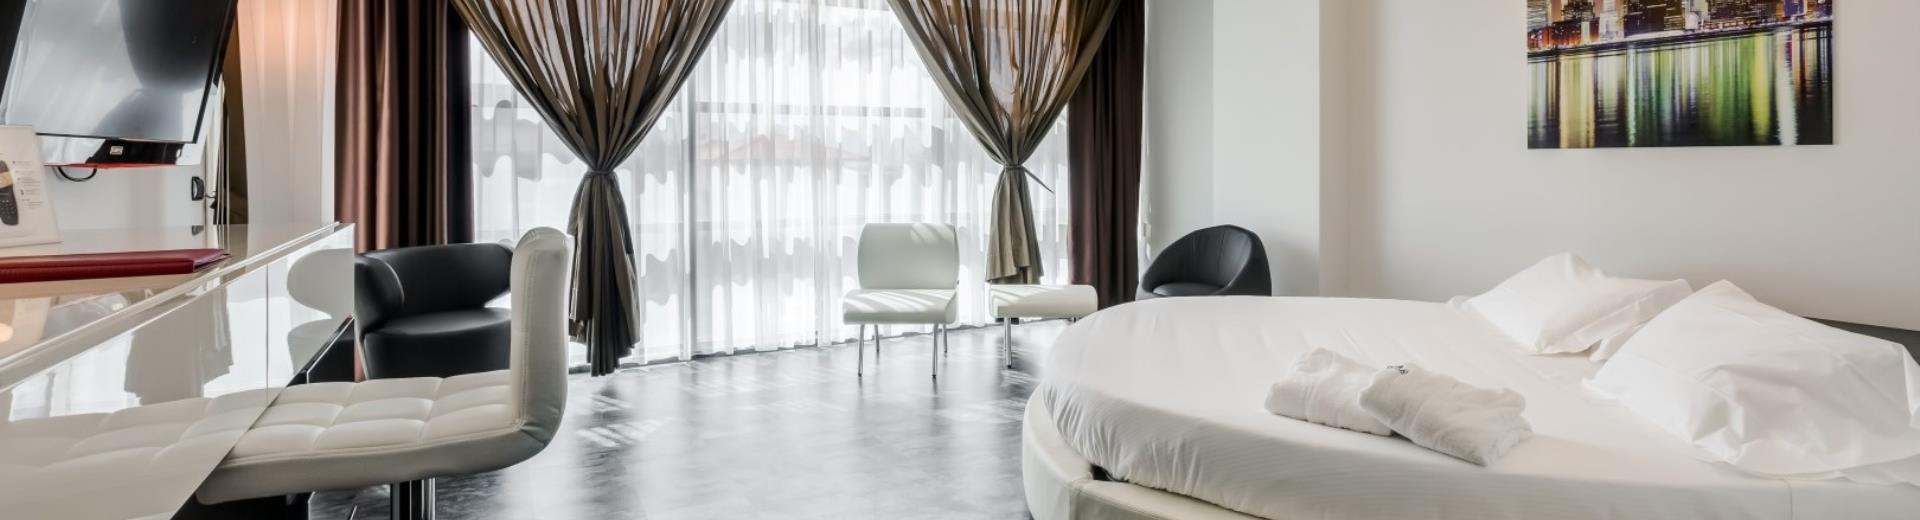 Rooms at Best Western Hotel Class in Lamezia Terme